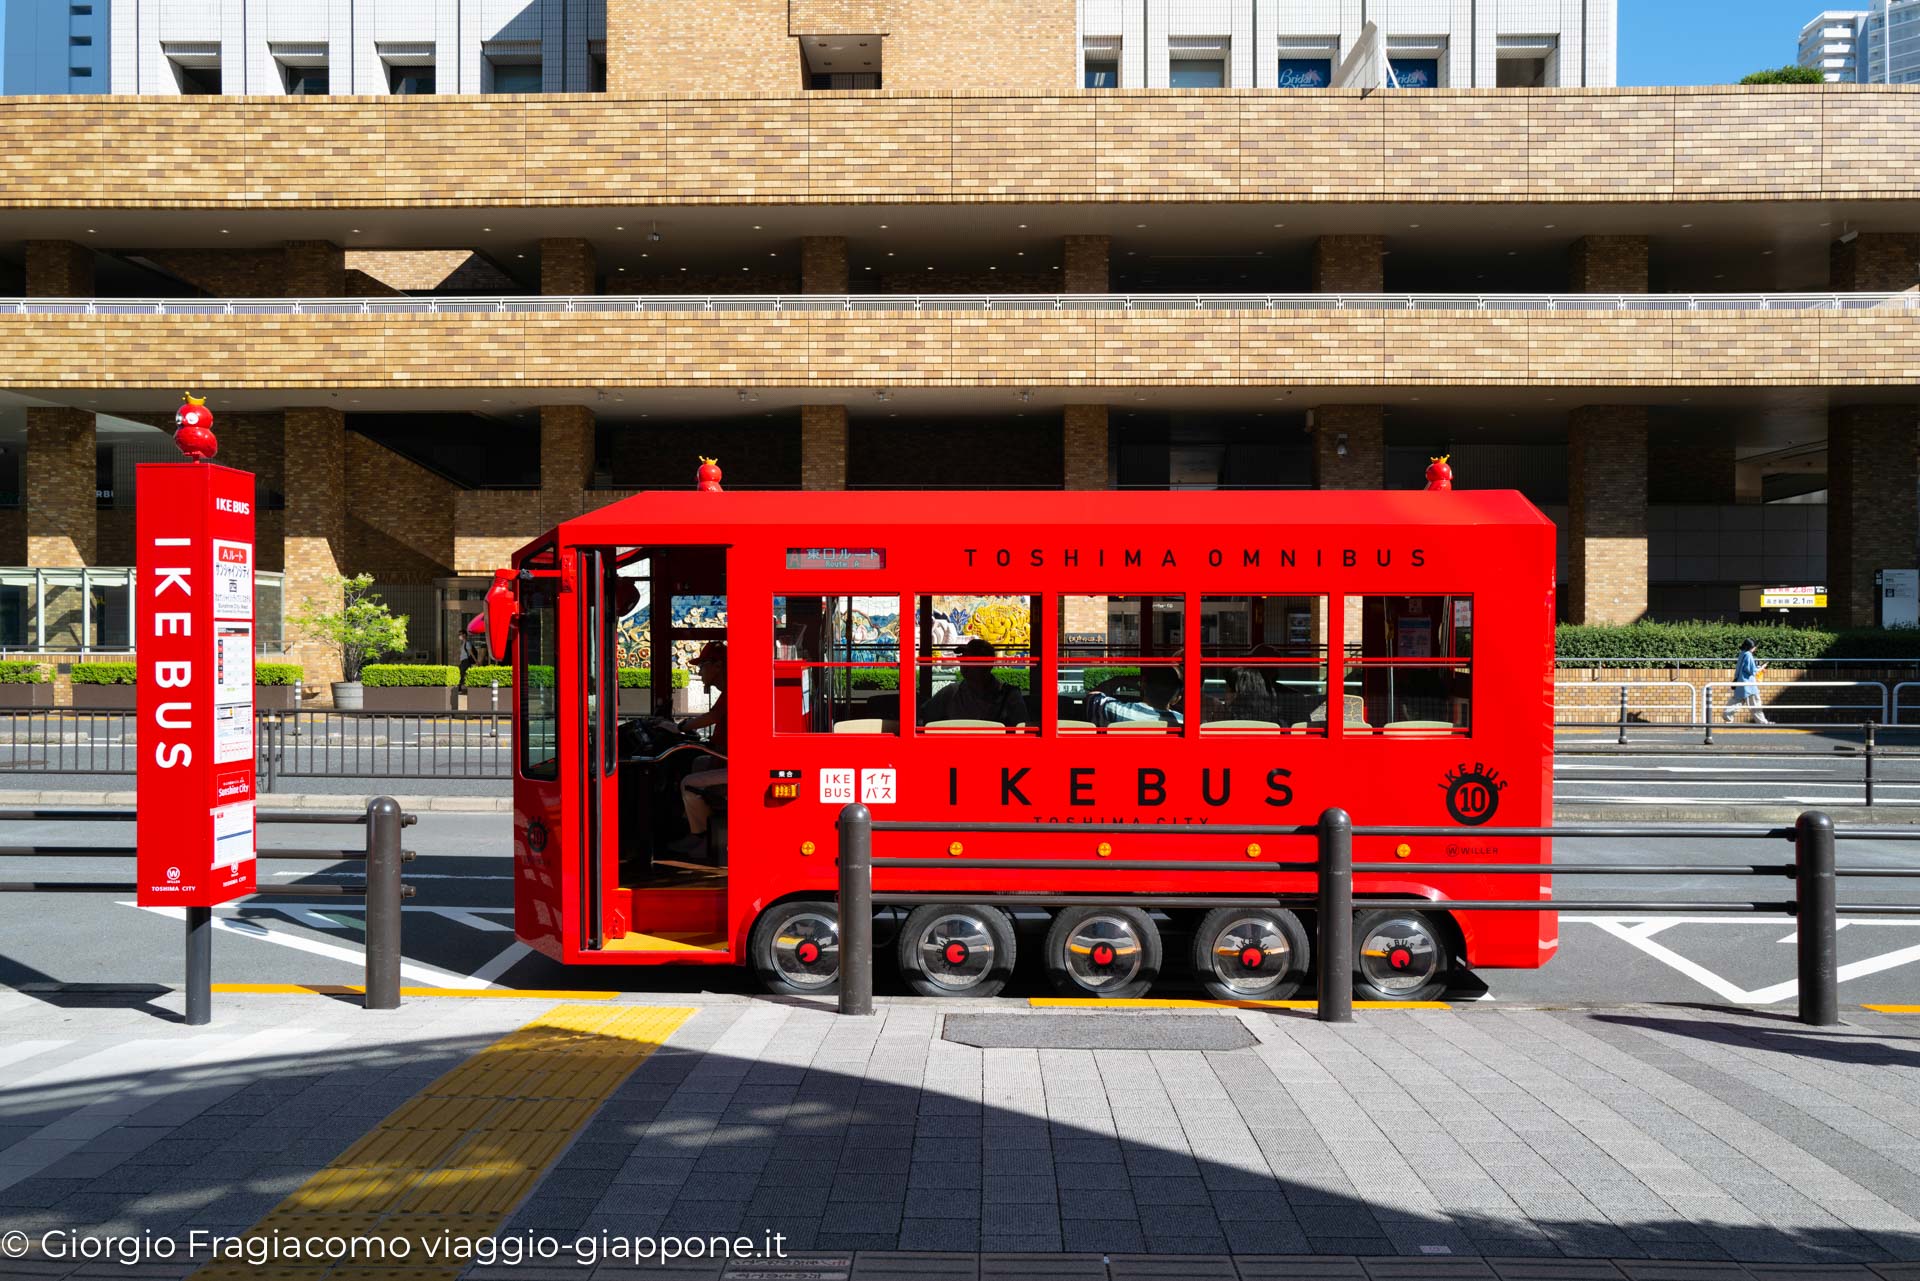 Ikebus red bus Ikebukuro L1130955